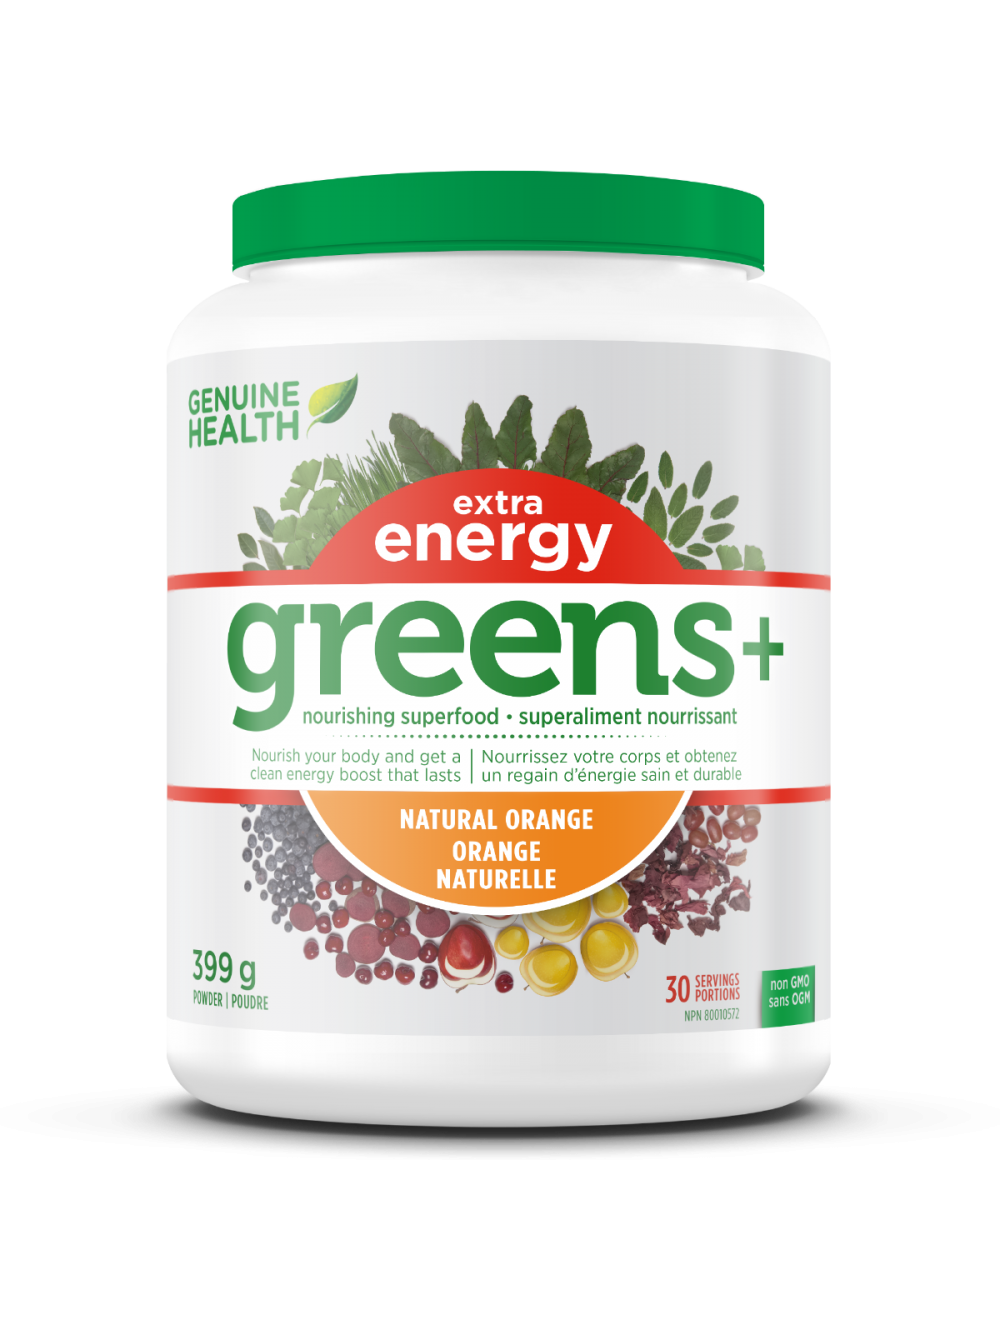 Genuine Health greens+ Extra energy - Orange - Ebambu.ca free delivery >59$